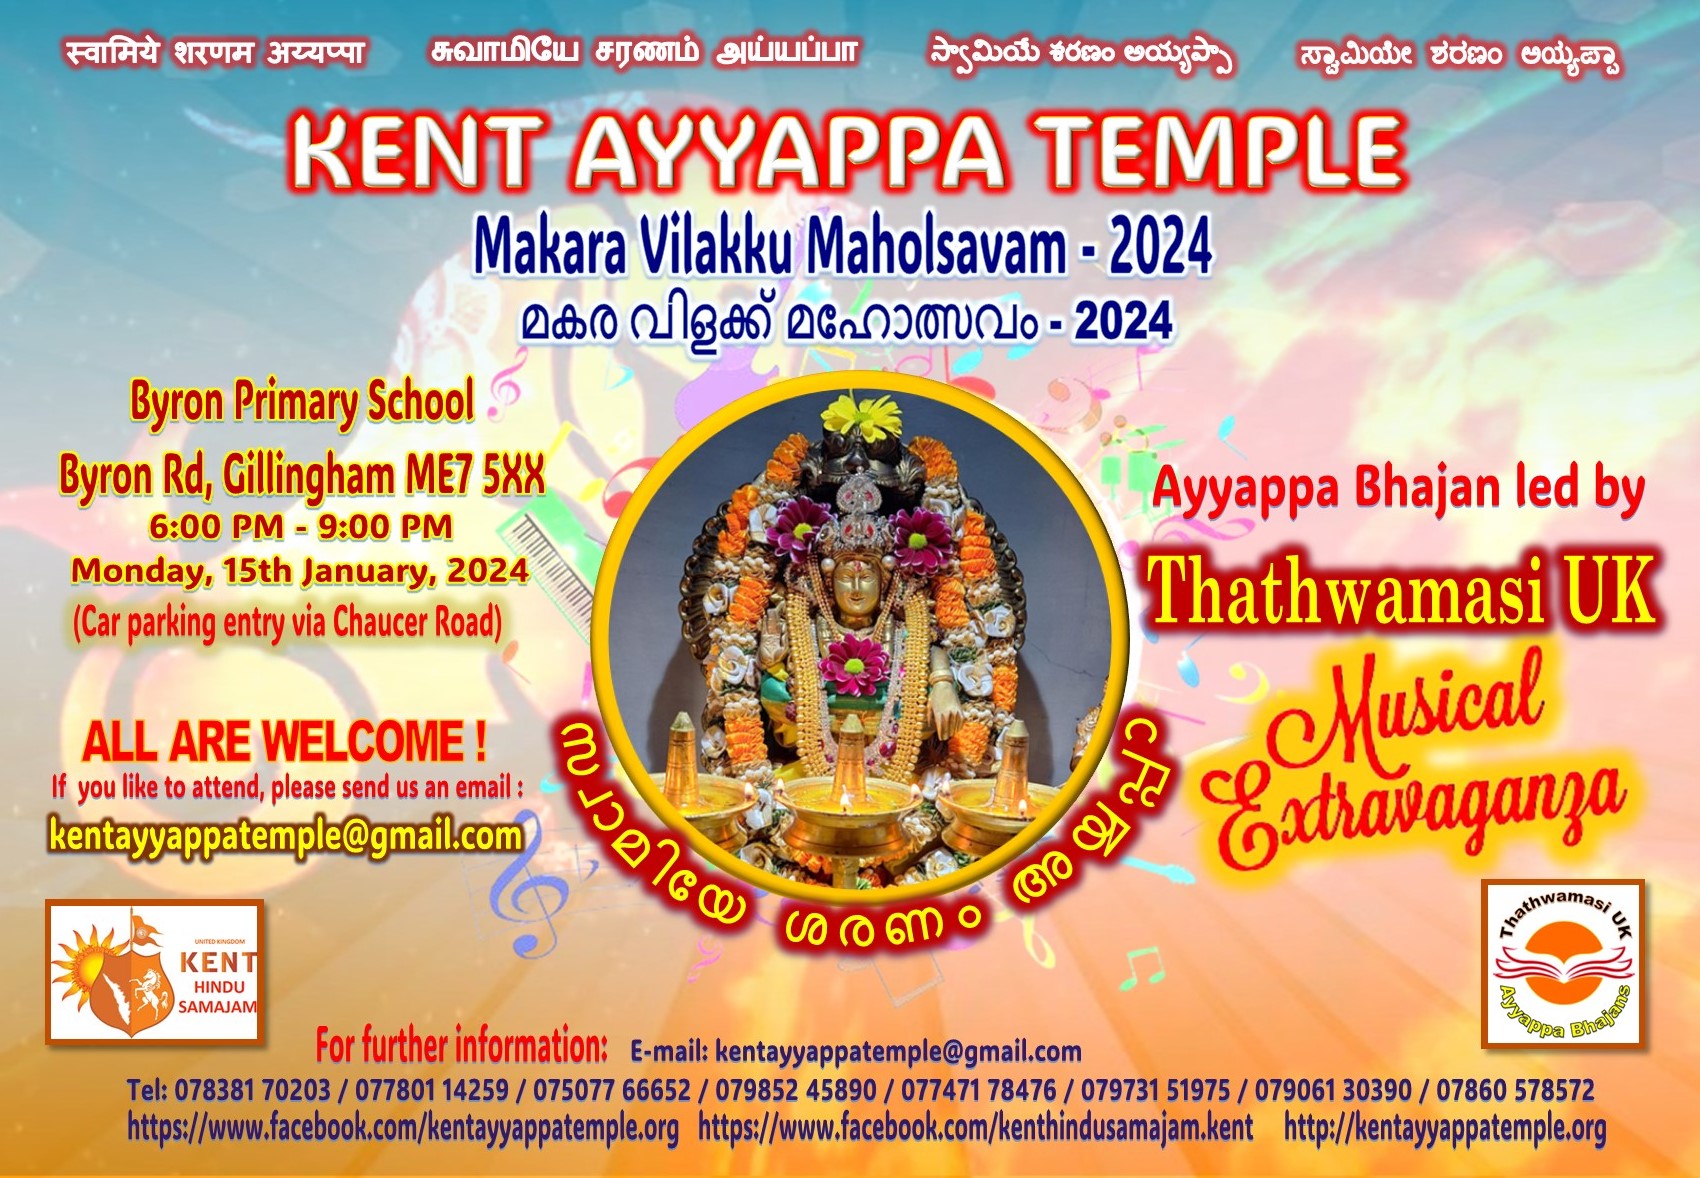 Kent Ayyappa Temple Makara Vilakku Mahotsavam 2024 Kent Ayyappa Temple